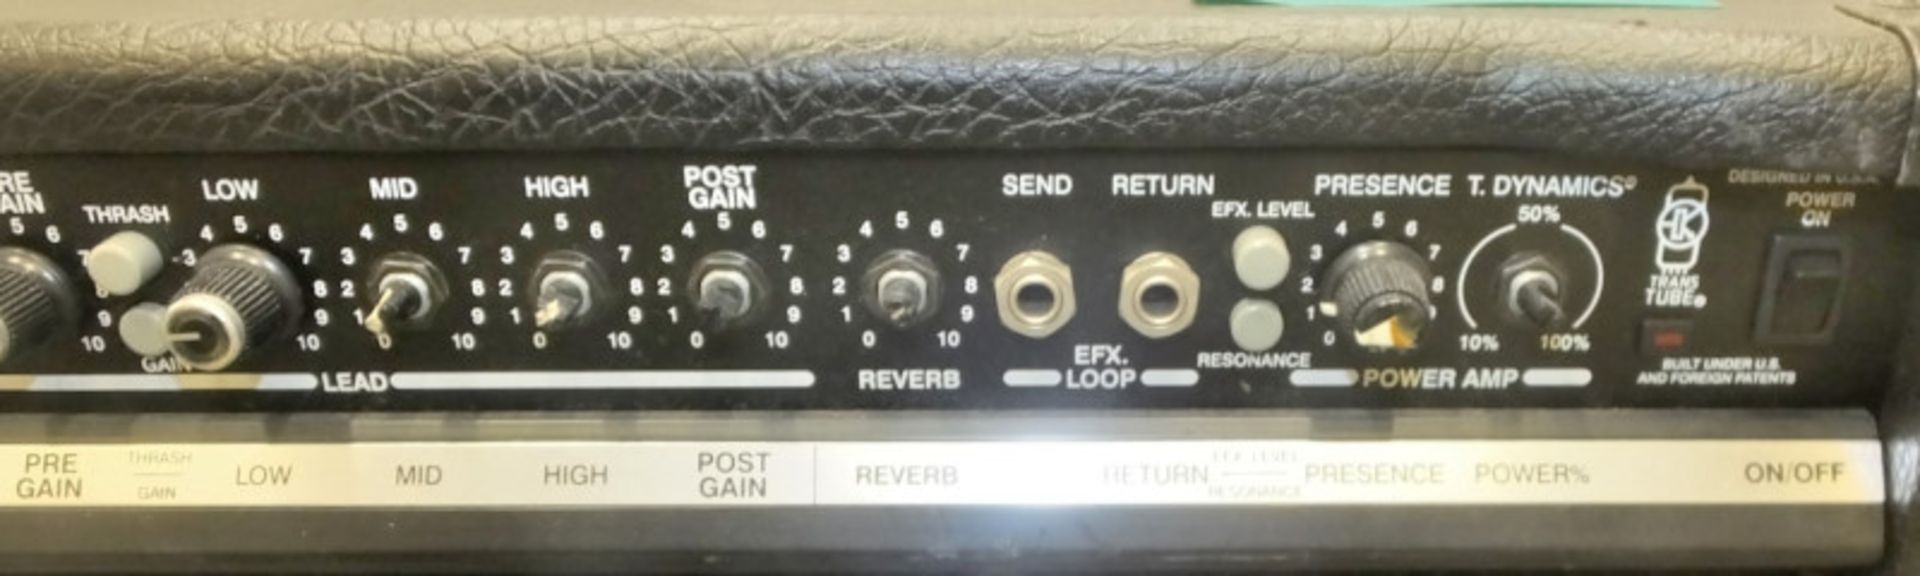 Peavey Bandit 112 Guitar Amplifier - Image 5 of 5